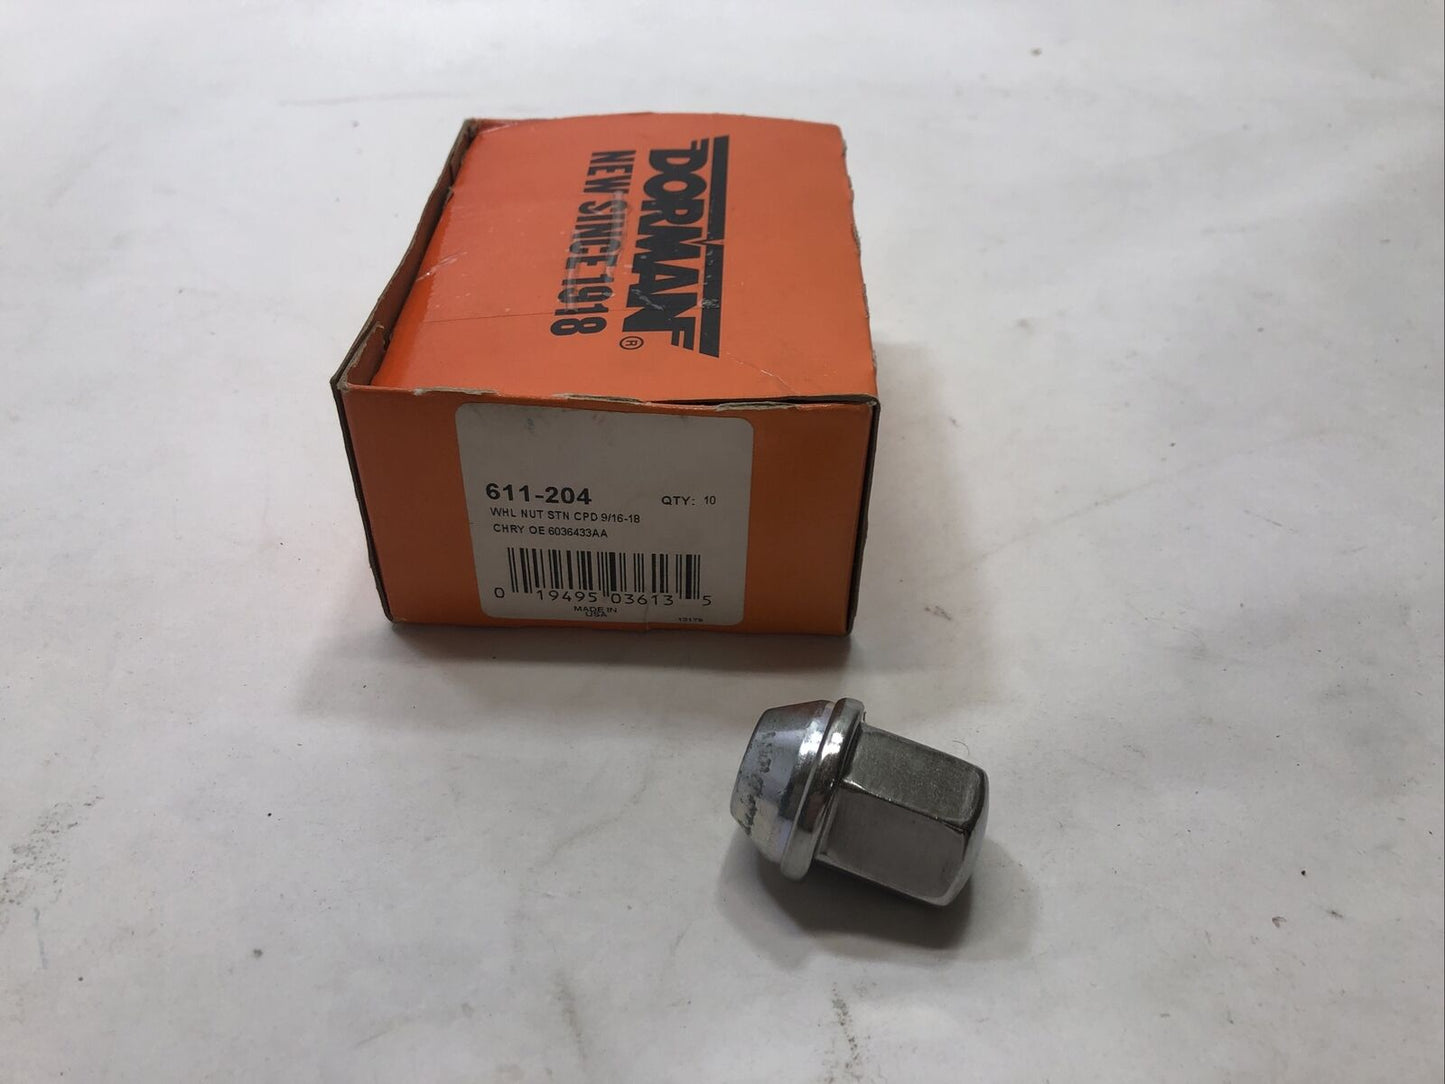 1 Single* New Dorman Wheel Lug Nut For Dodge Ram 611-204